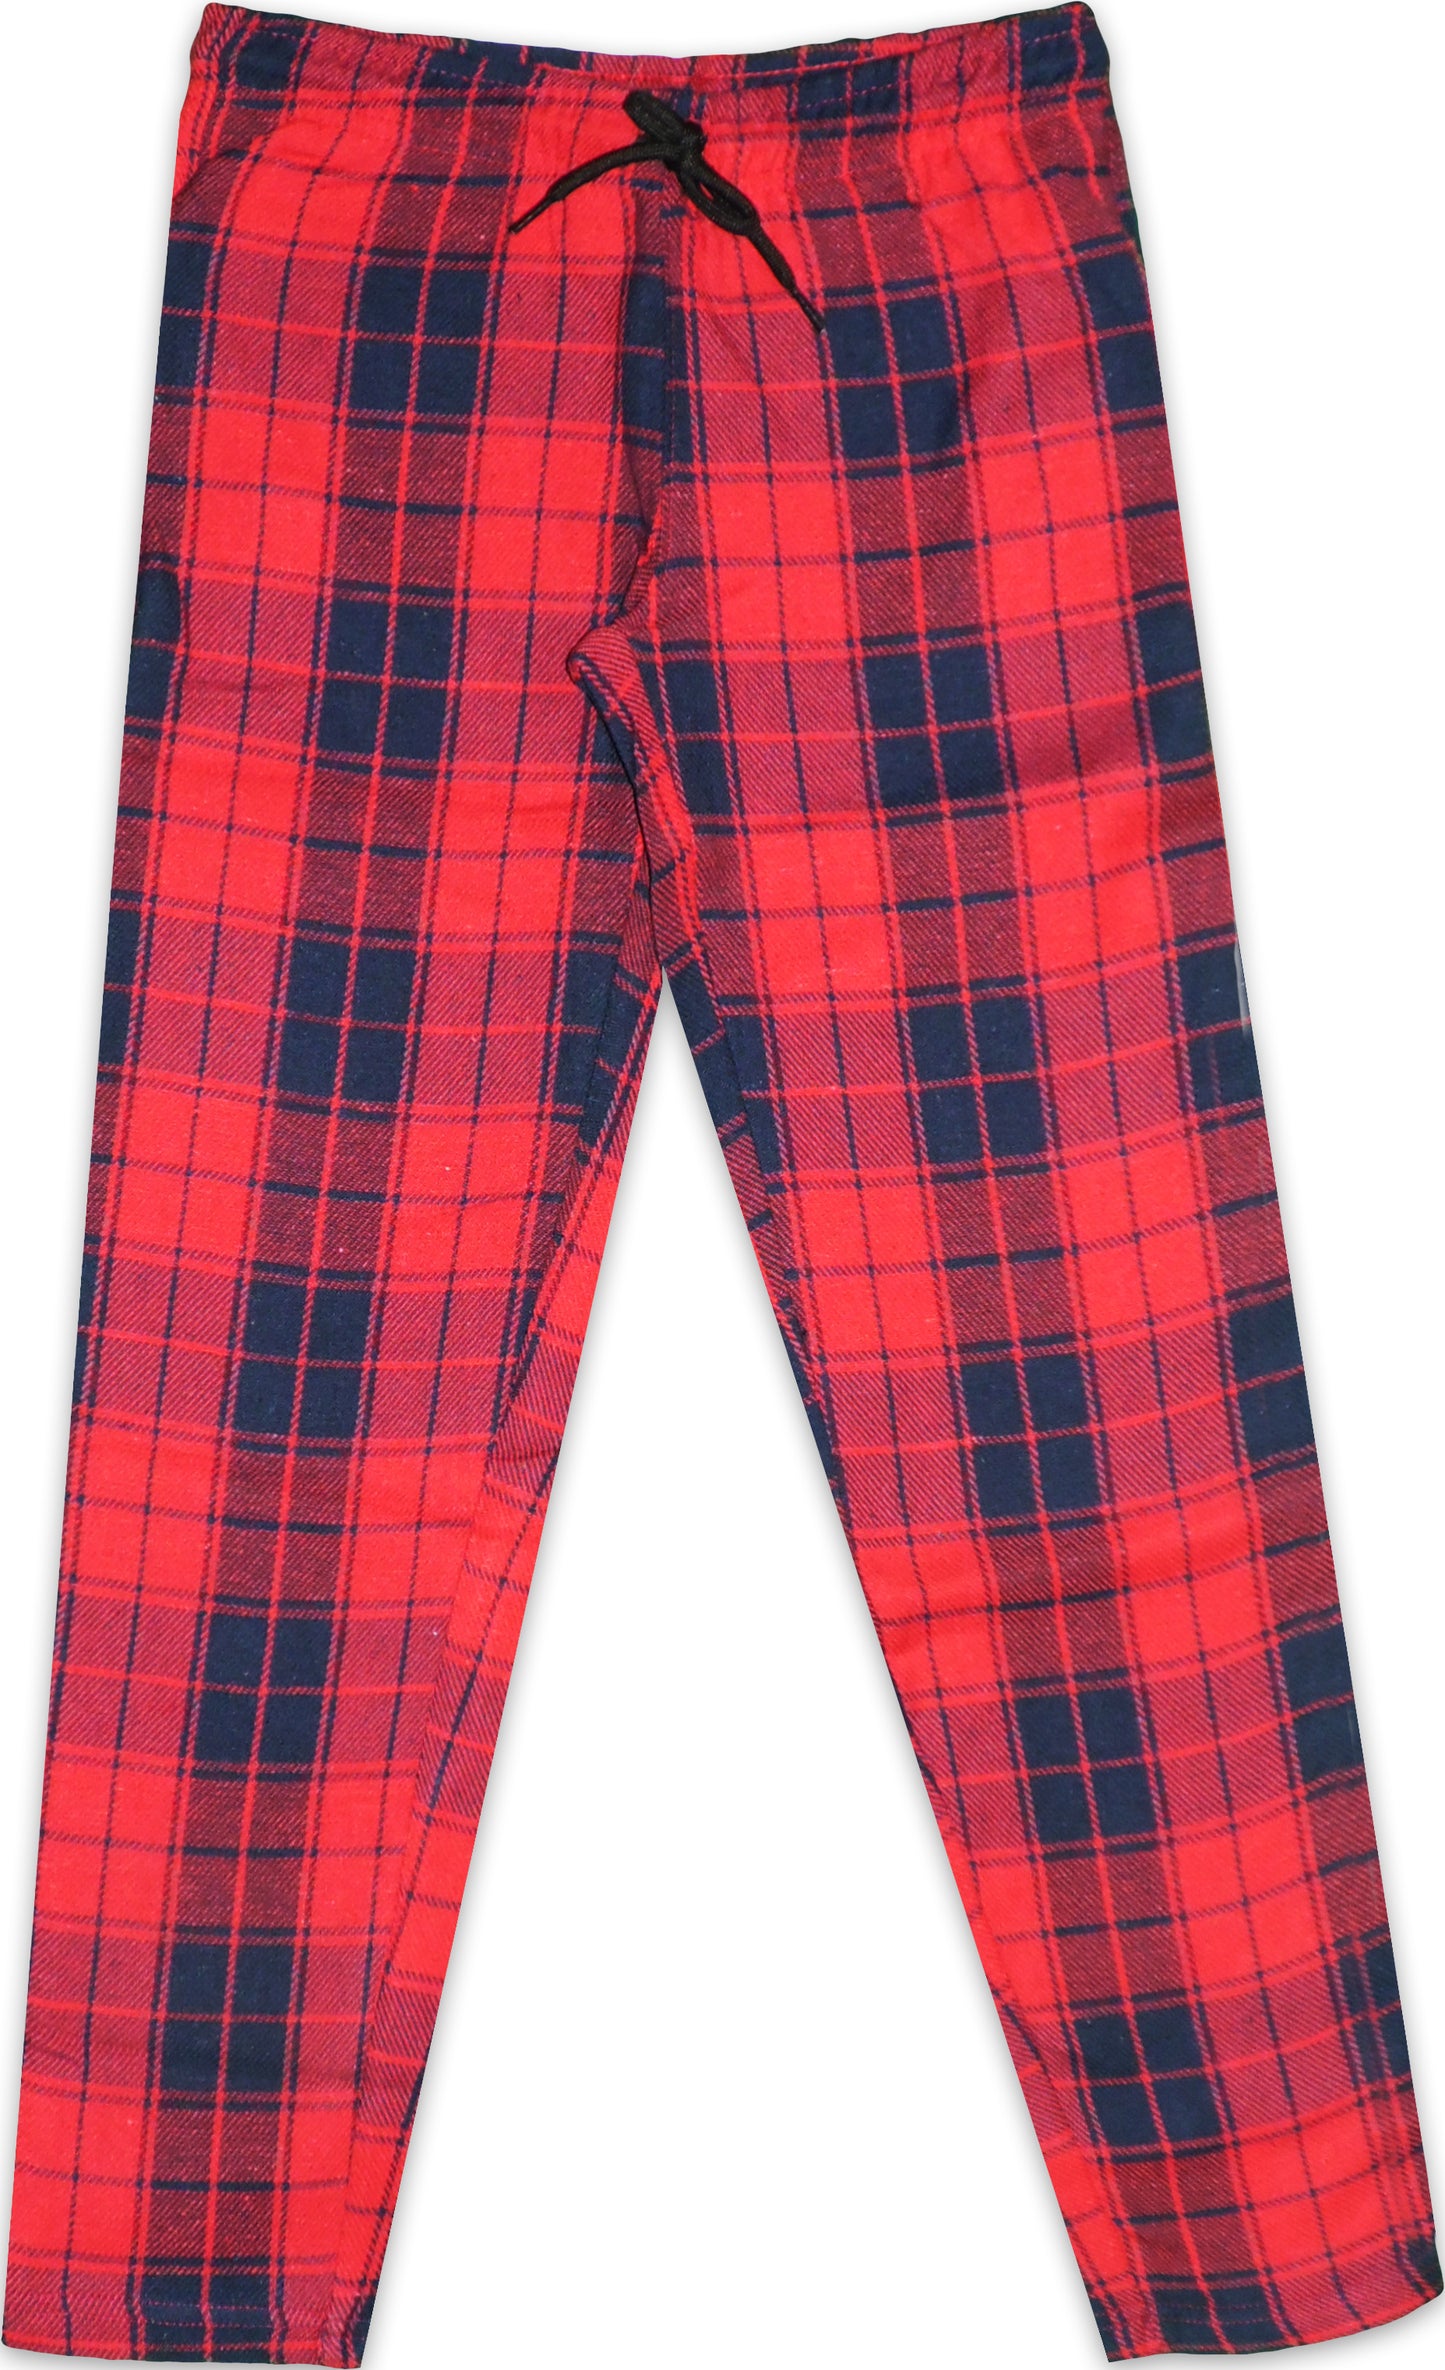 Cotton Flannel Kids Pajamas Pyjama Set Jammies Sleepwear